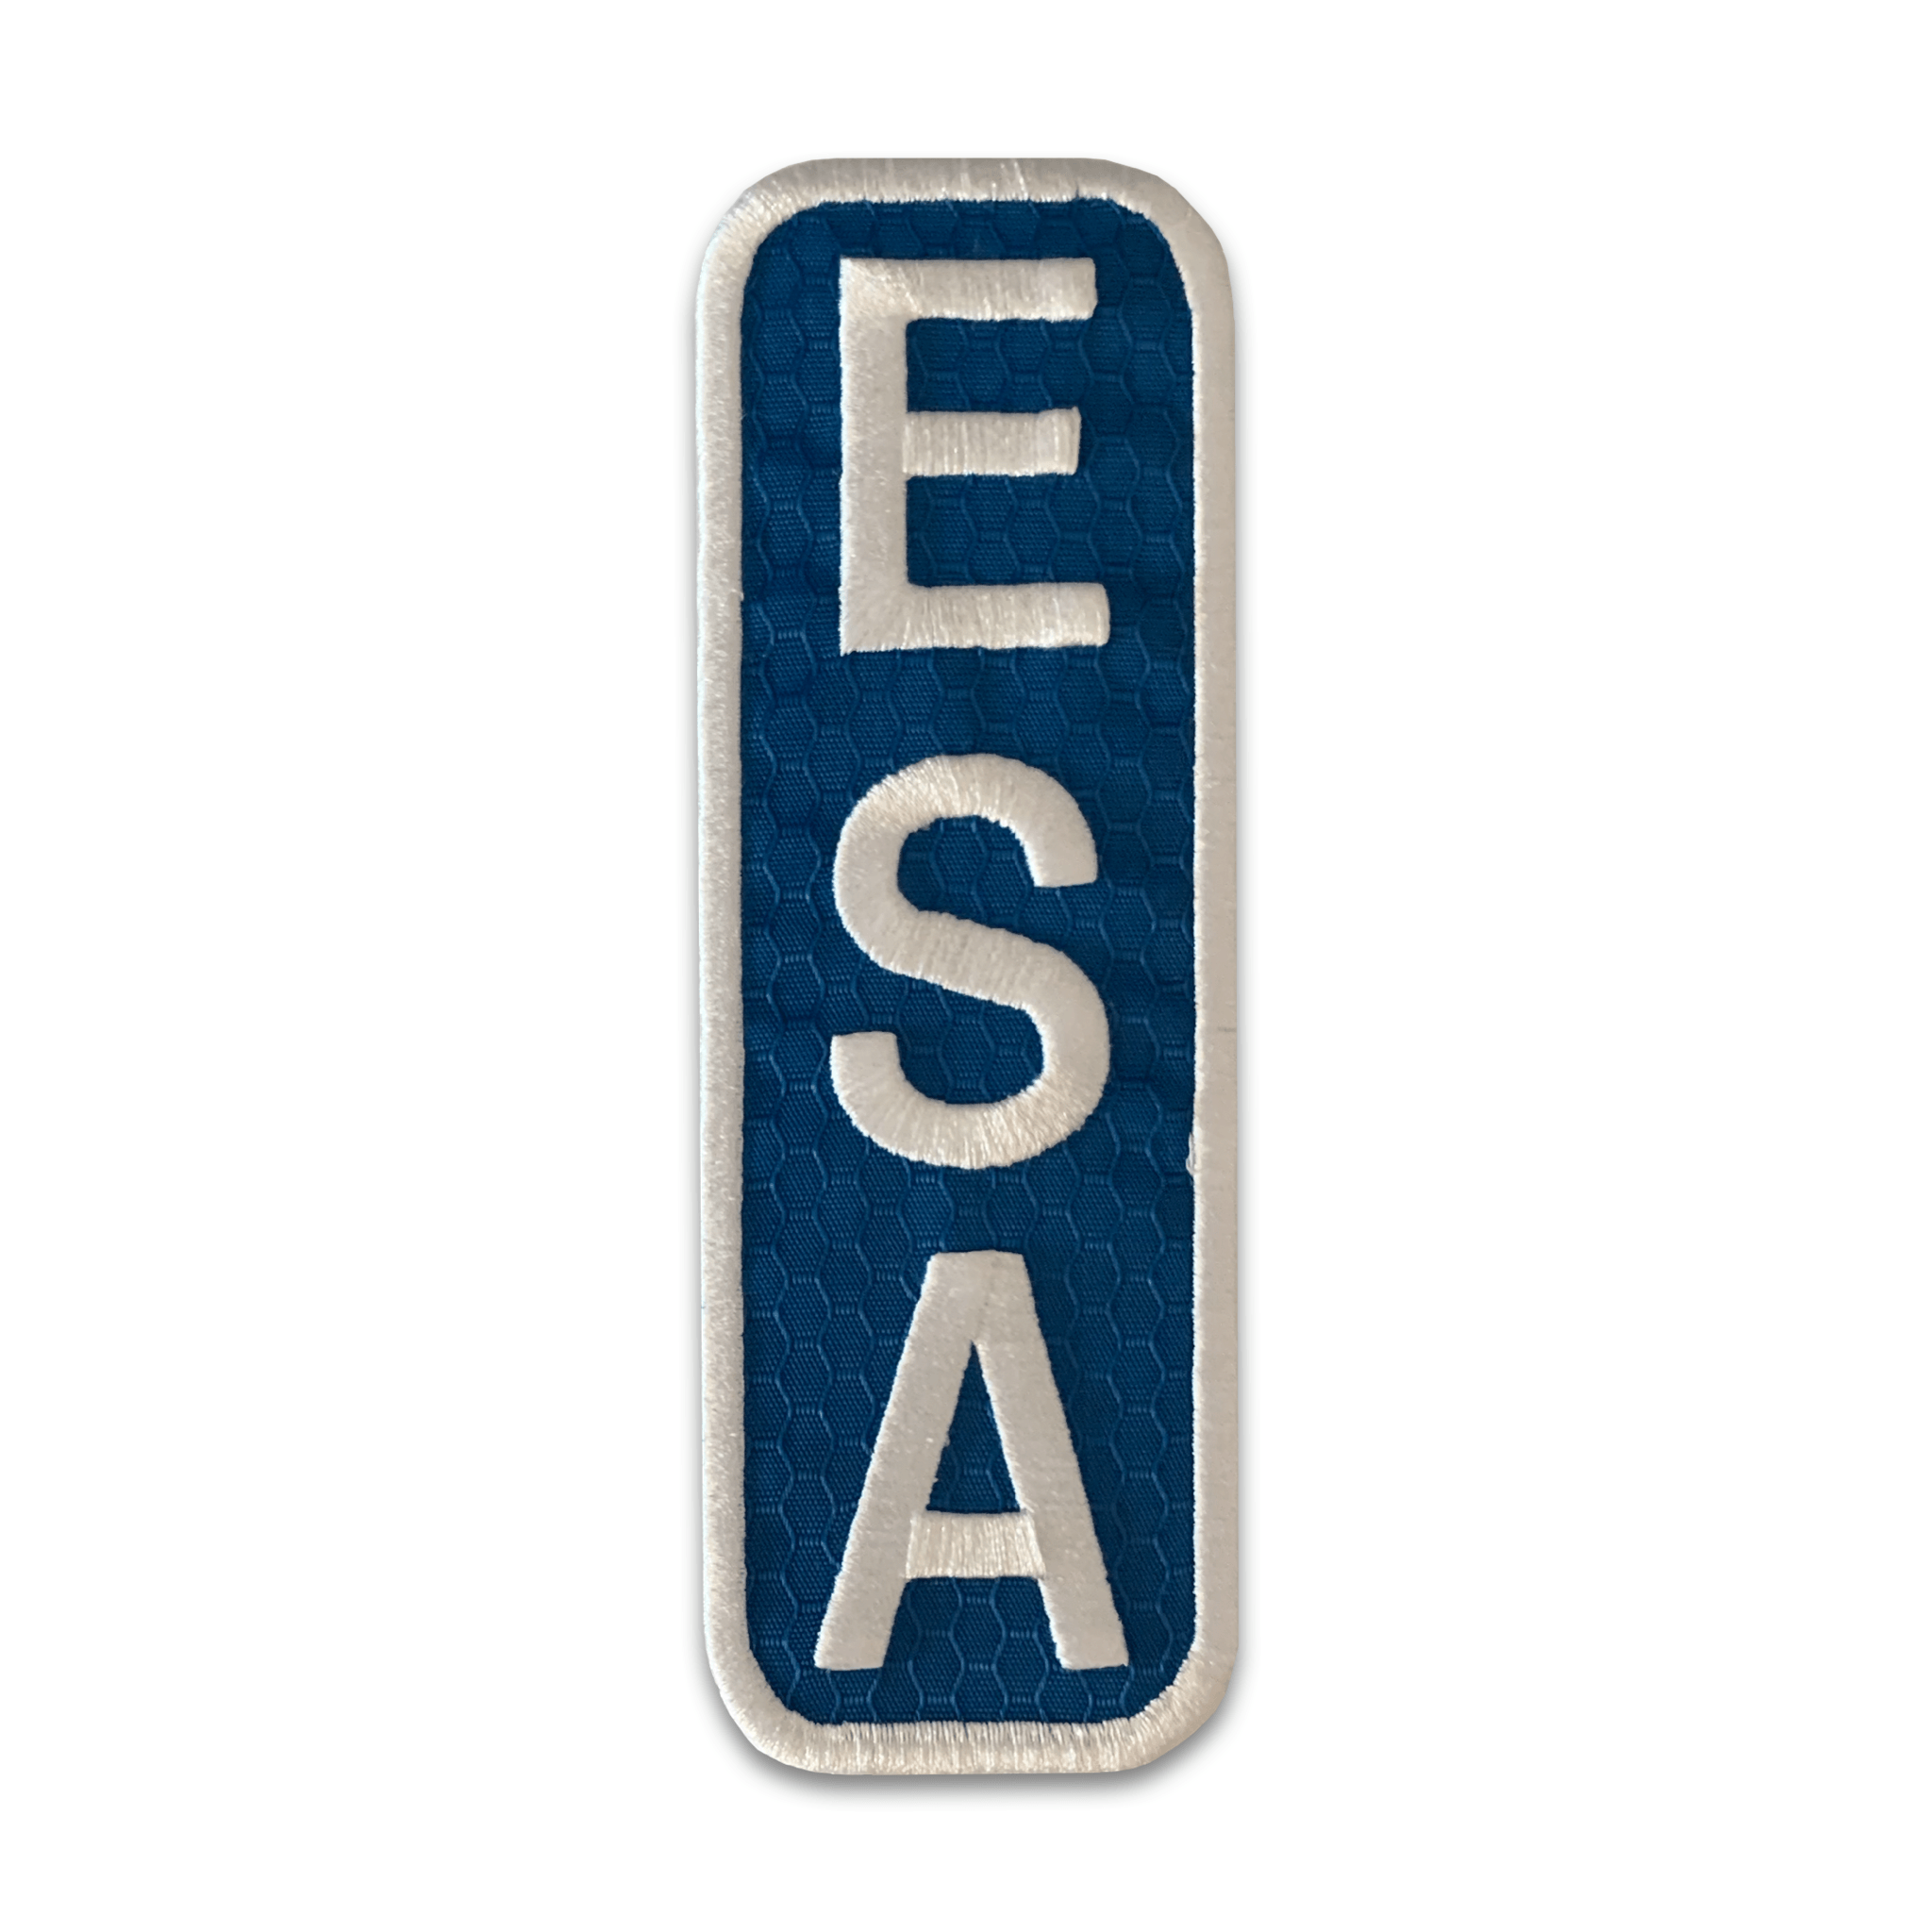 ESA Blue Service dog patches